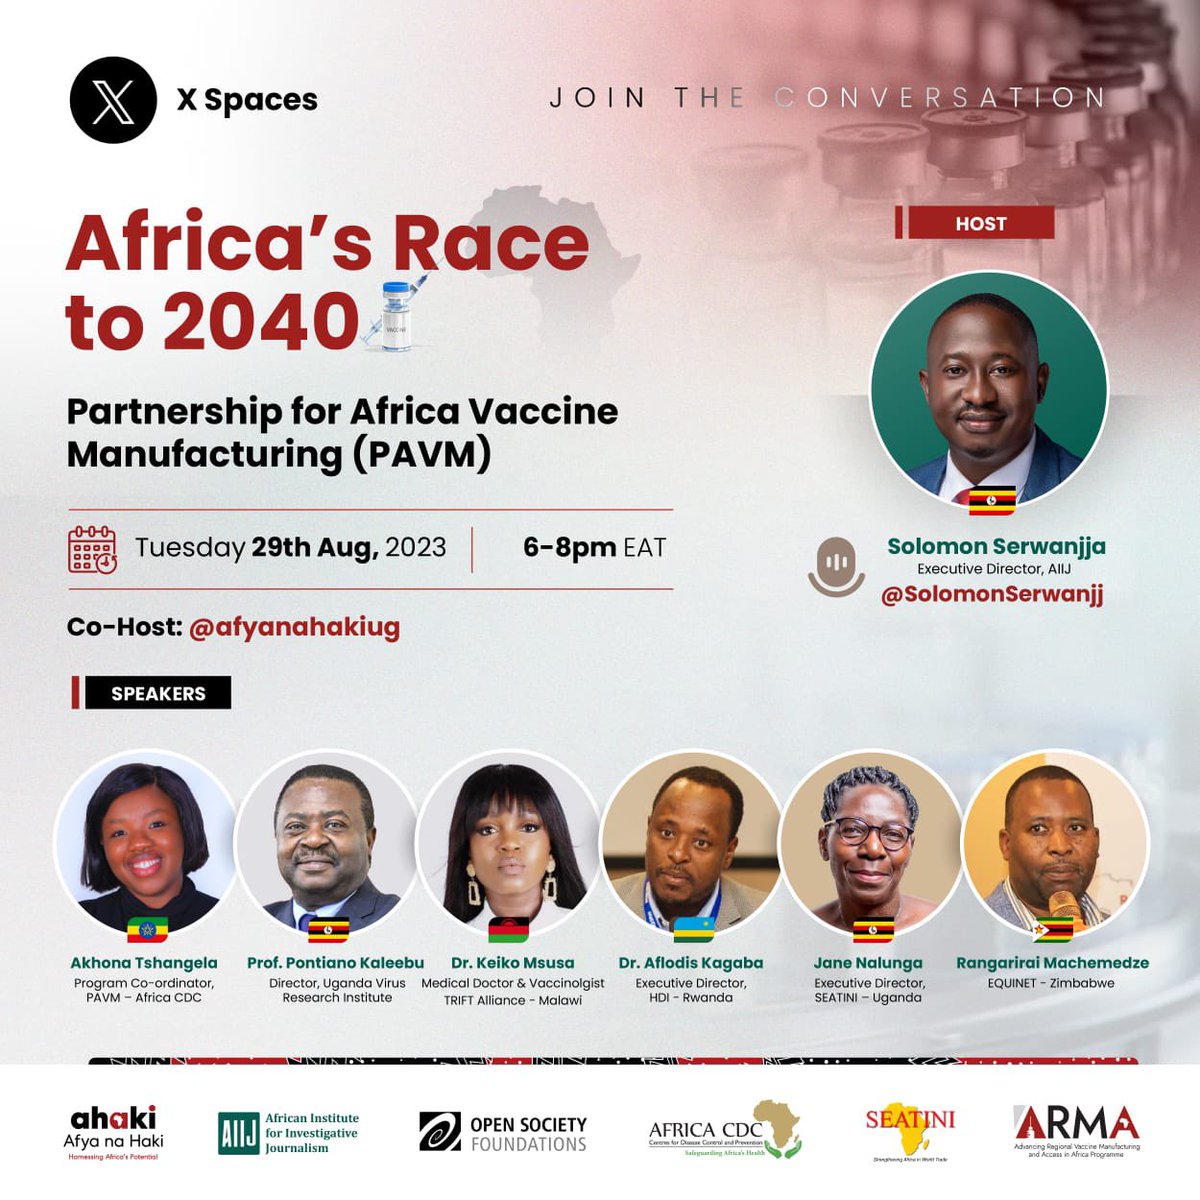 Join @SolomonSerwanjj, @AkhonaTshangela, @aflodiskagaba, @KaleebuPontiano, @SeatiniU, Keiko Msusa, and Rangarirai Machemedze for an X Space conversation on the Partnership for Africa Vaccine Manufacturing (PAVM) today at 6 to 8 PM EAT.
#AfricaRaceto2040